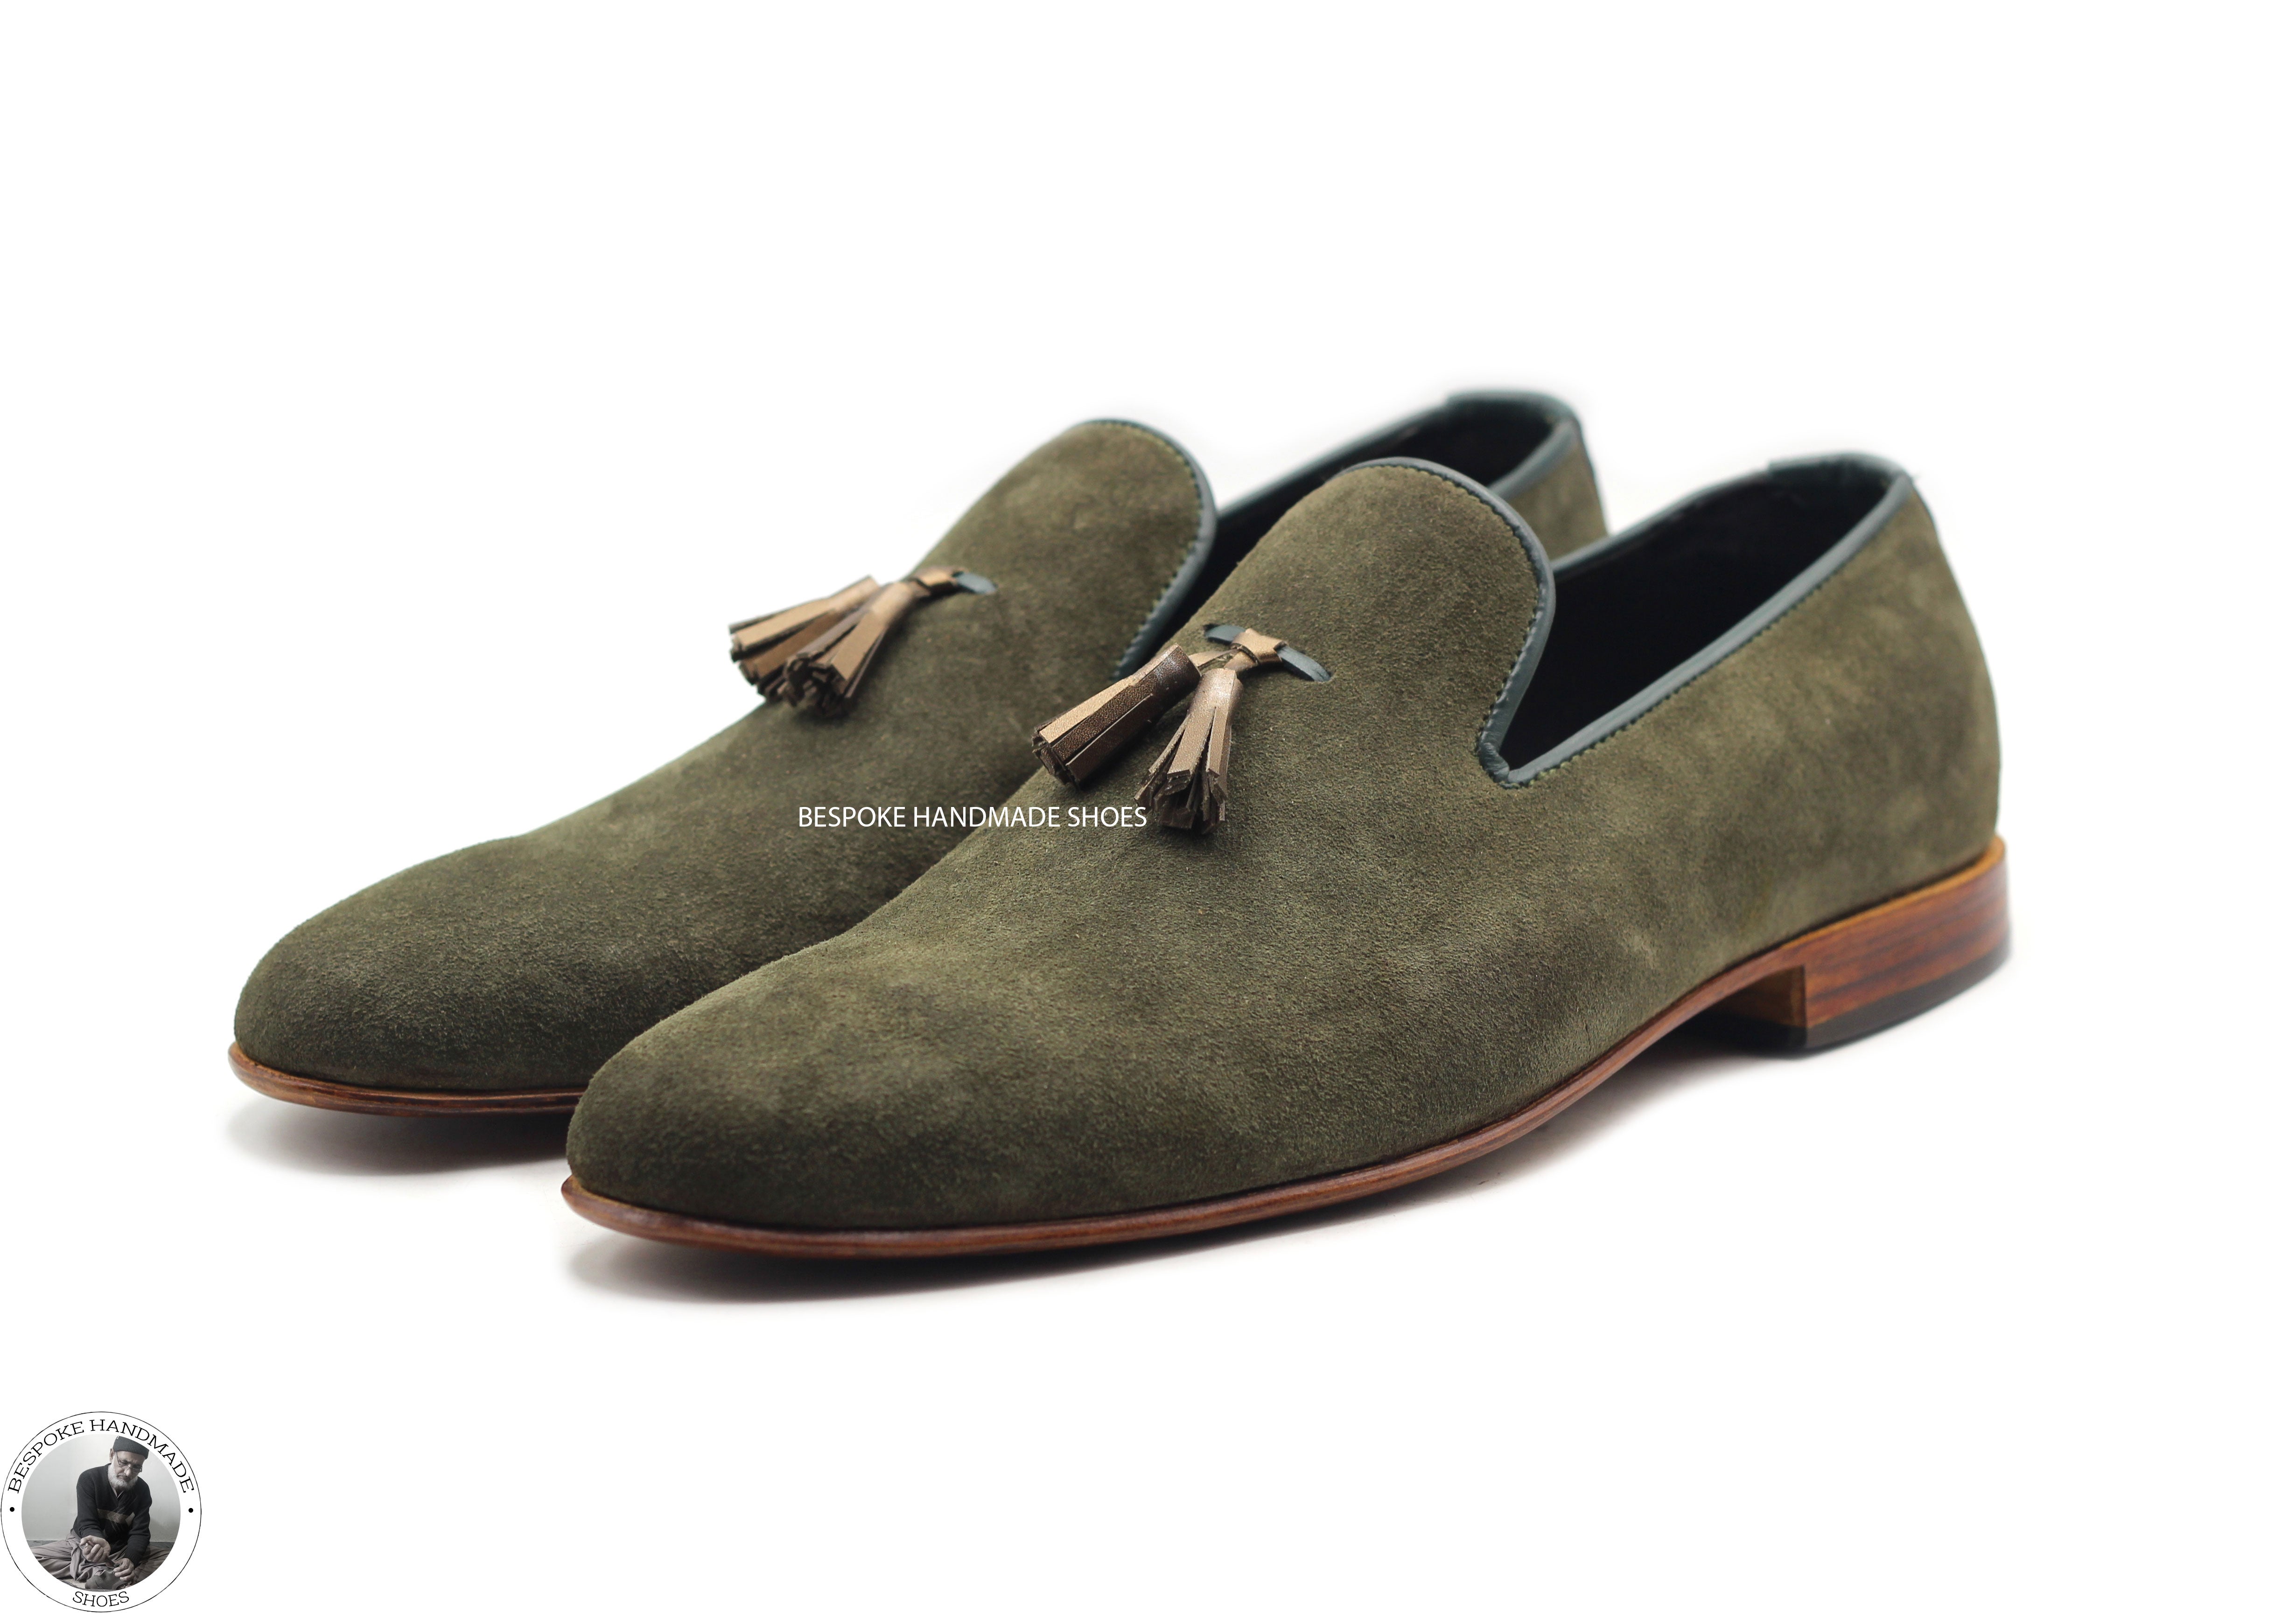 Bespoke Men's Premium Quality Olive Green Color Leather & Tassels Fashion / Dress Shoes For Men's